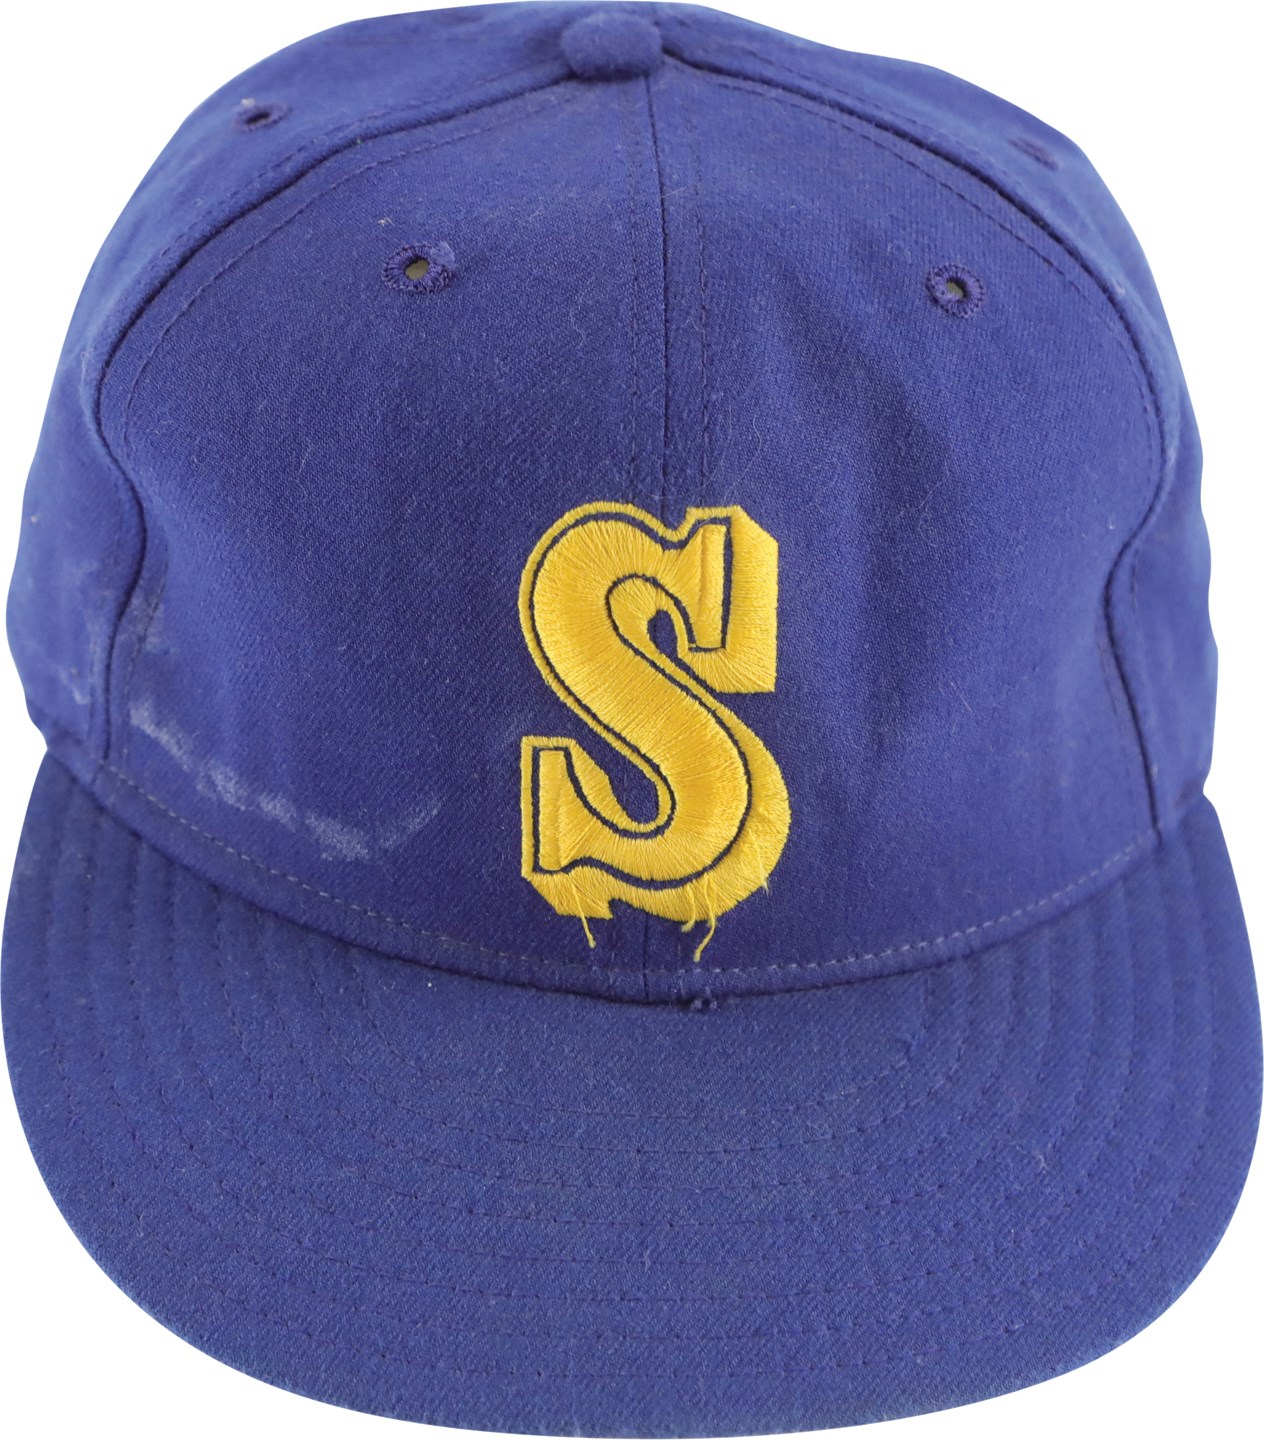 - 1989 Ken Griffey Jr. Seattle Mariners Rookie Signed Game Used Hat (Mill Creek COA & PSA)